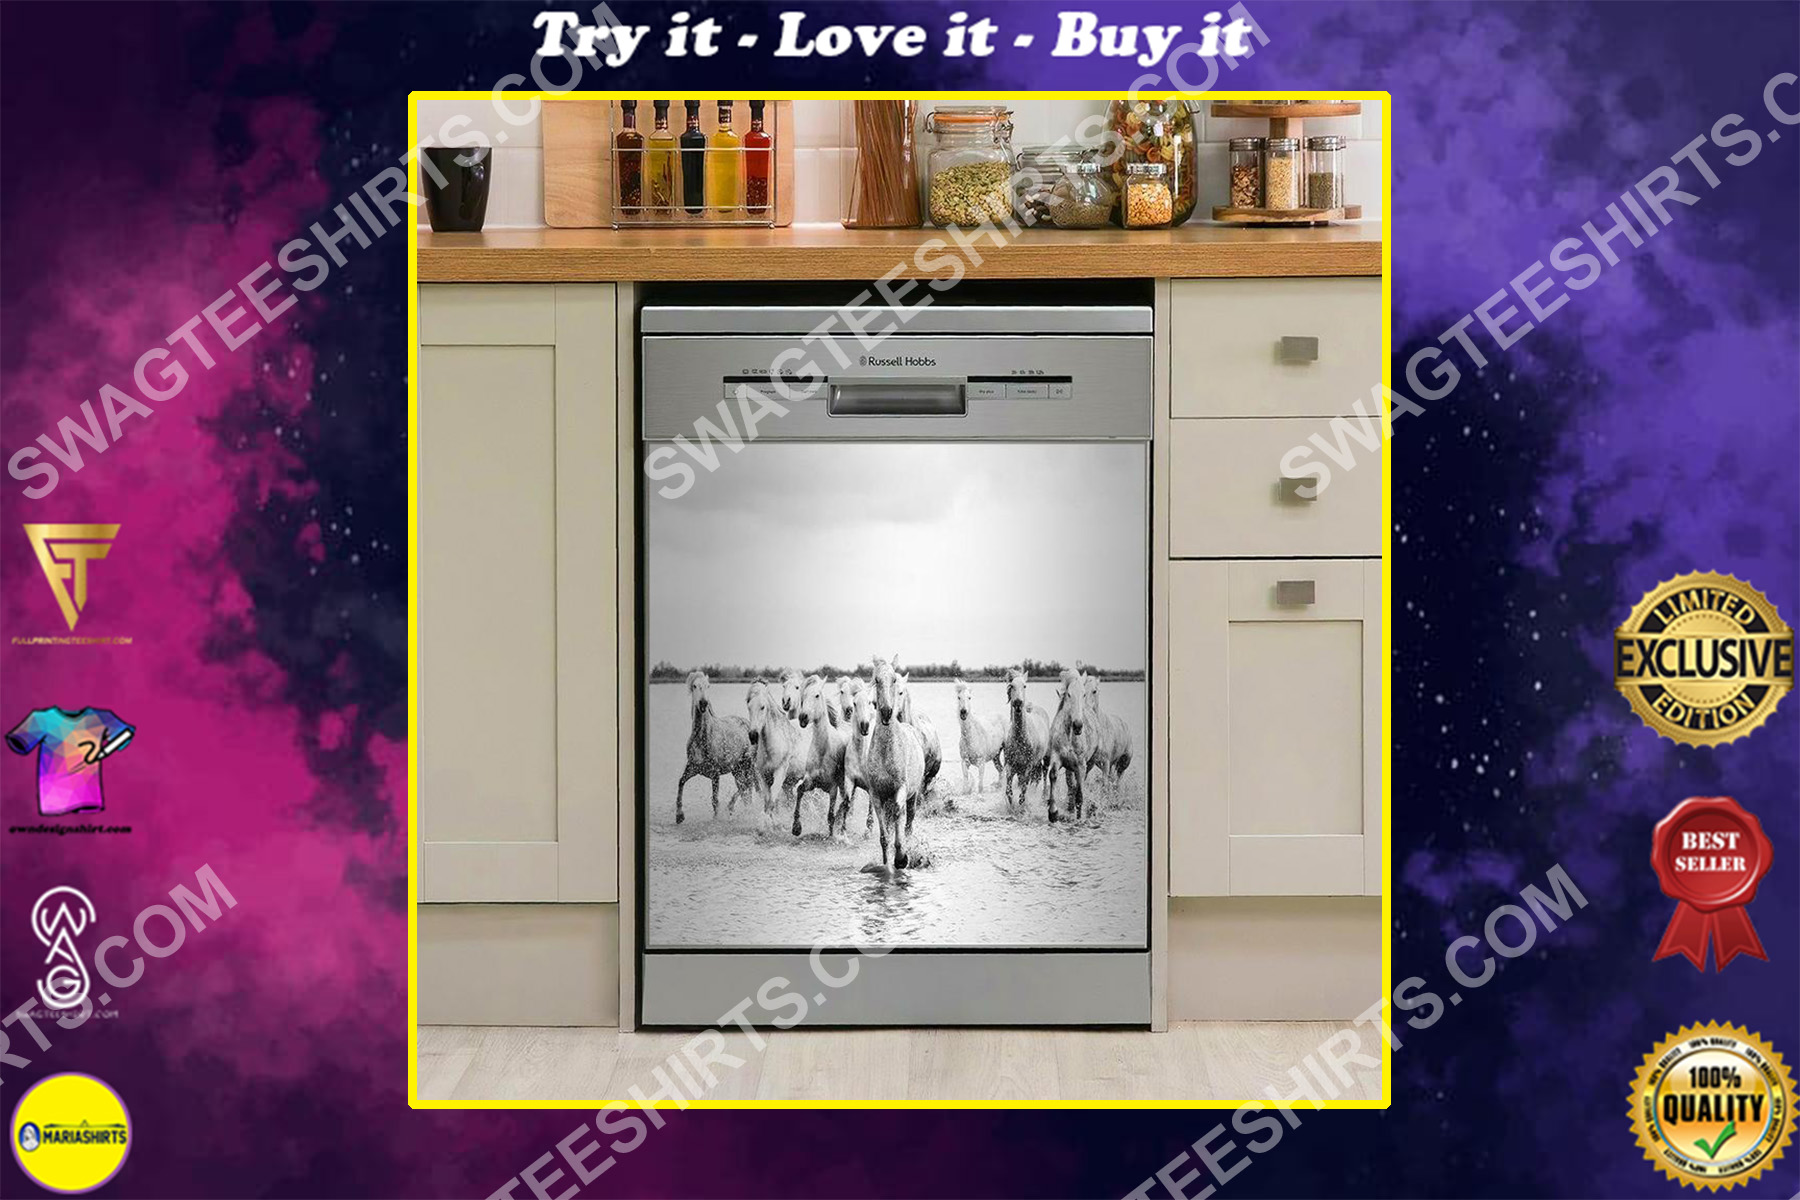 white horses kitchen decorative dishwasher magnet cover